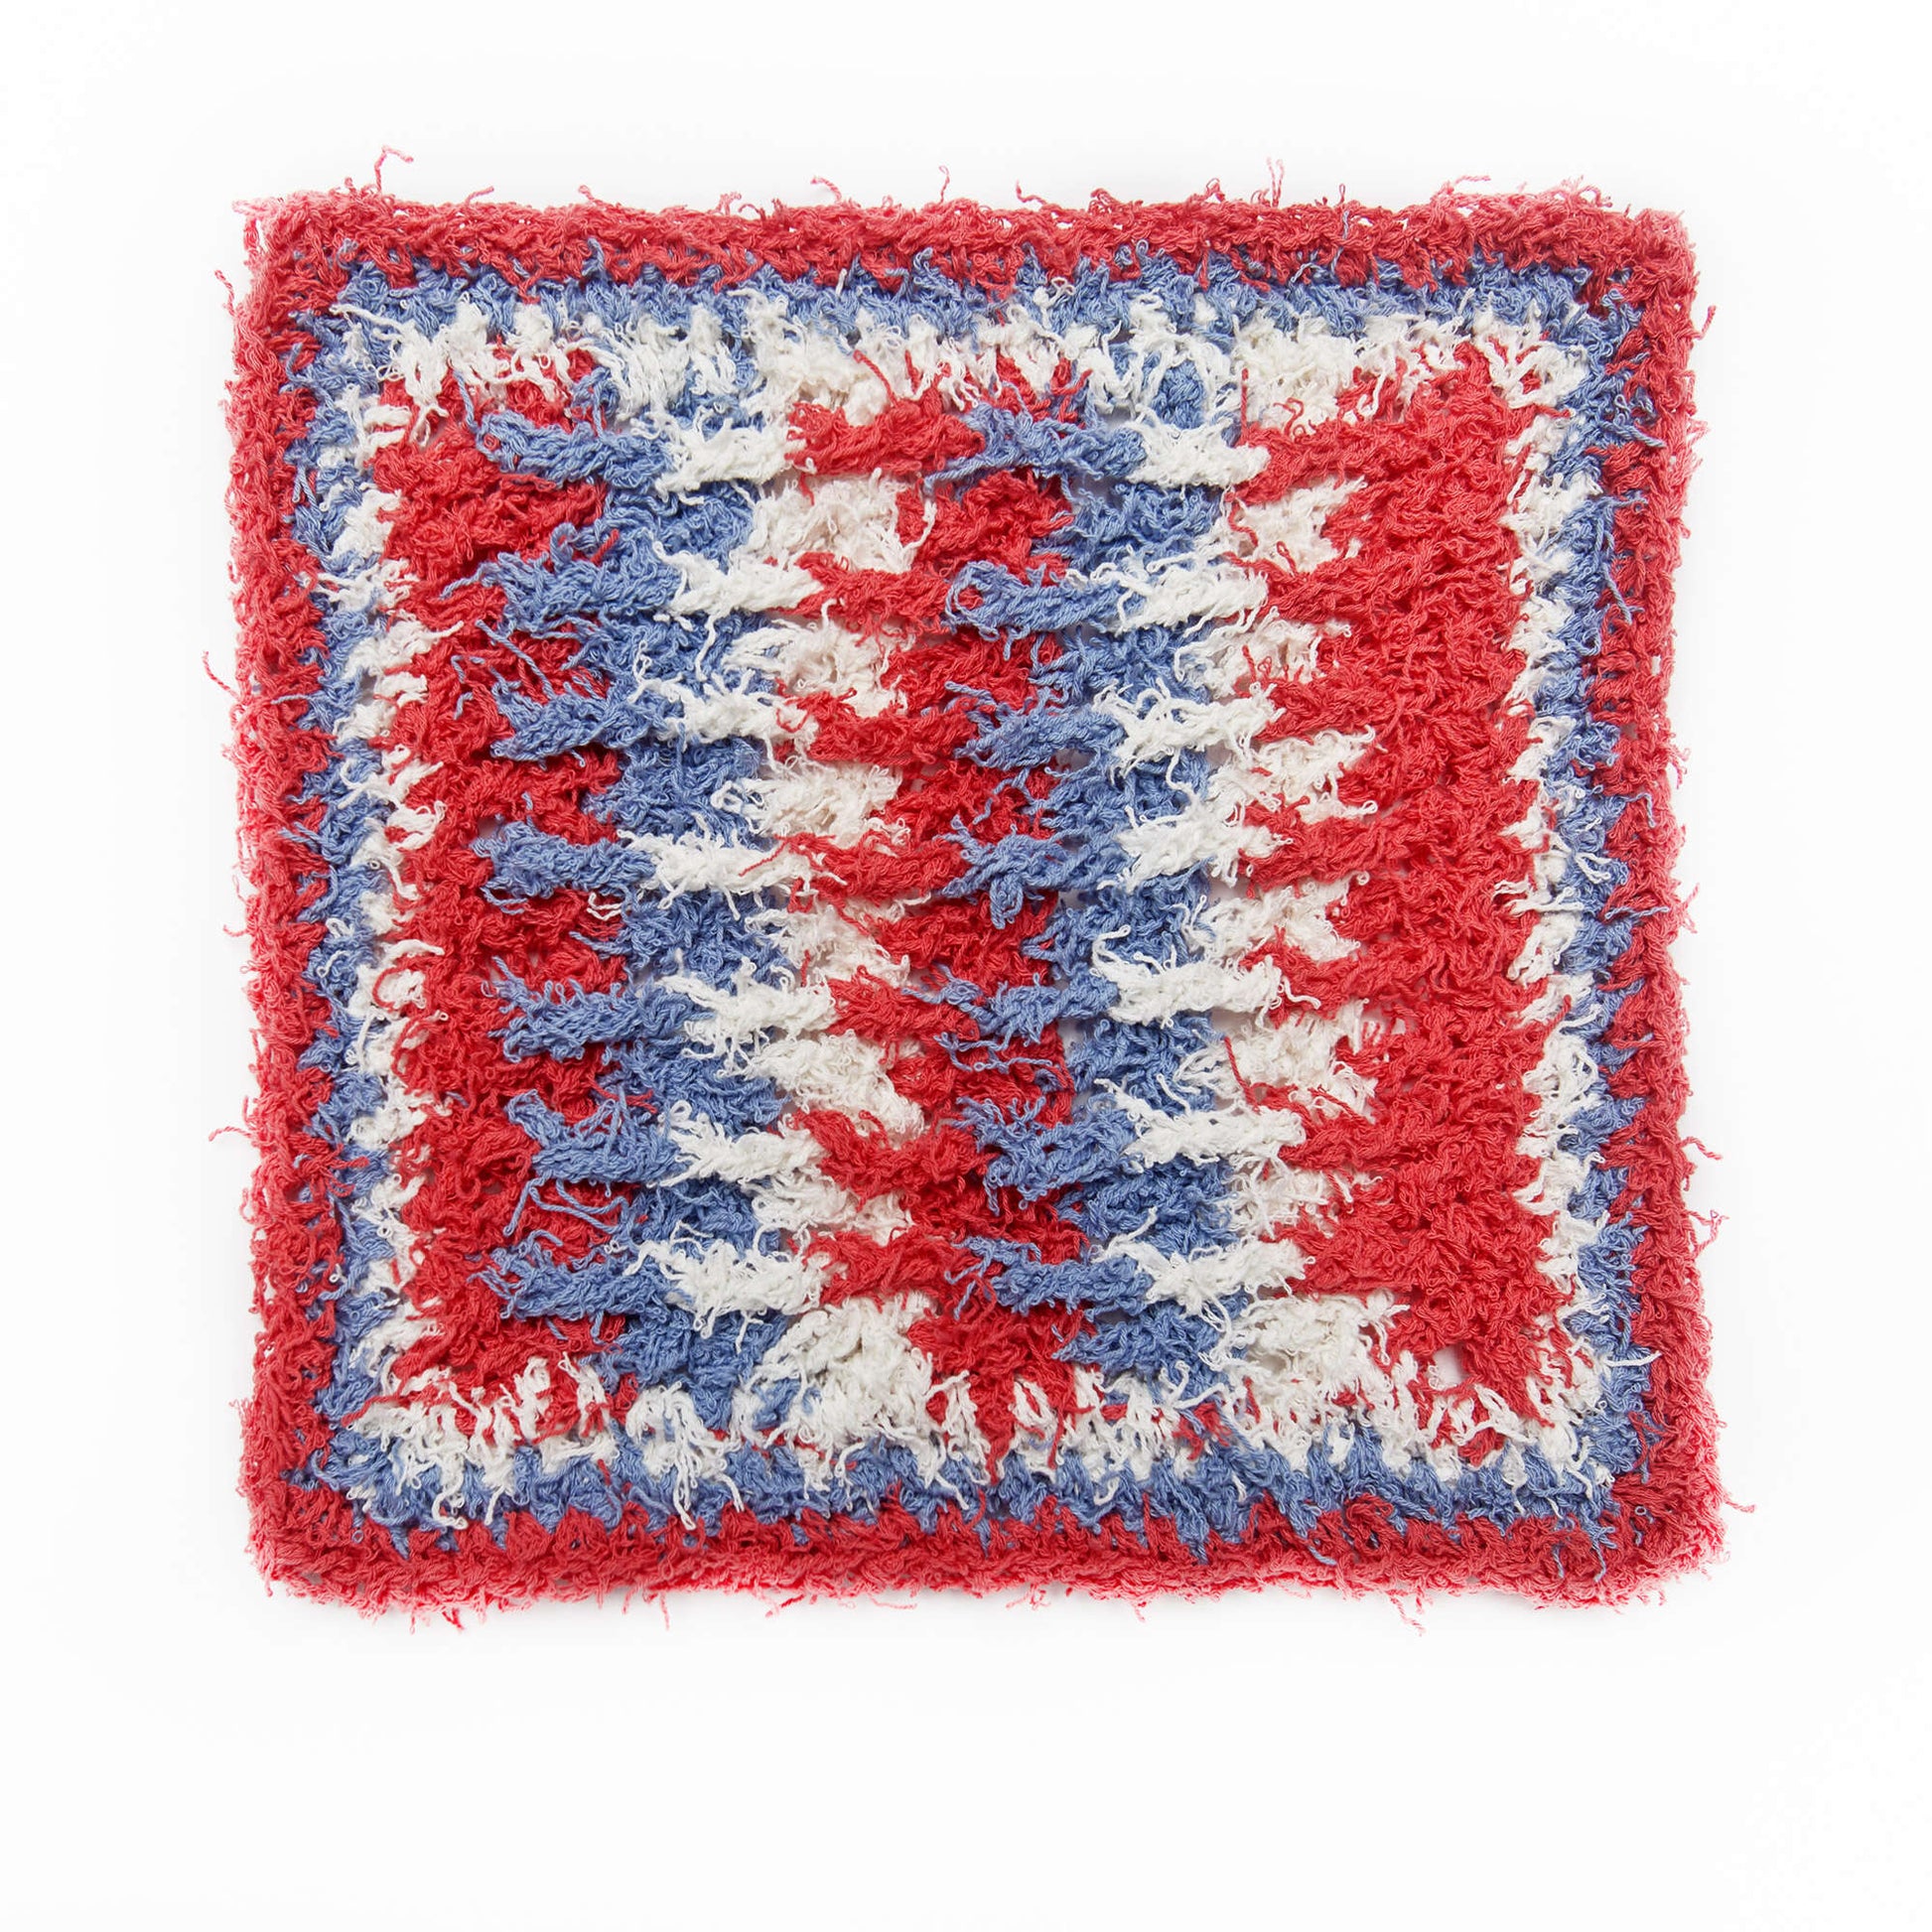 Free Red Heart Post Stitch Crochet Washcloth Pattern